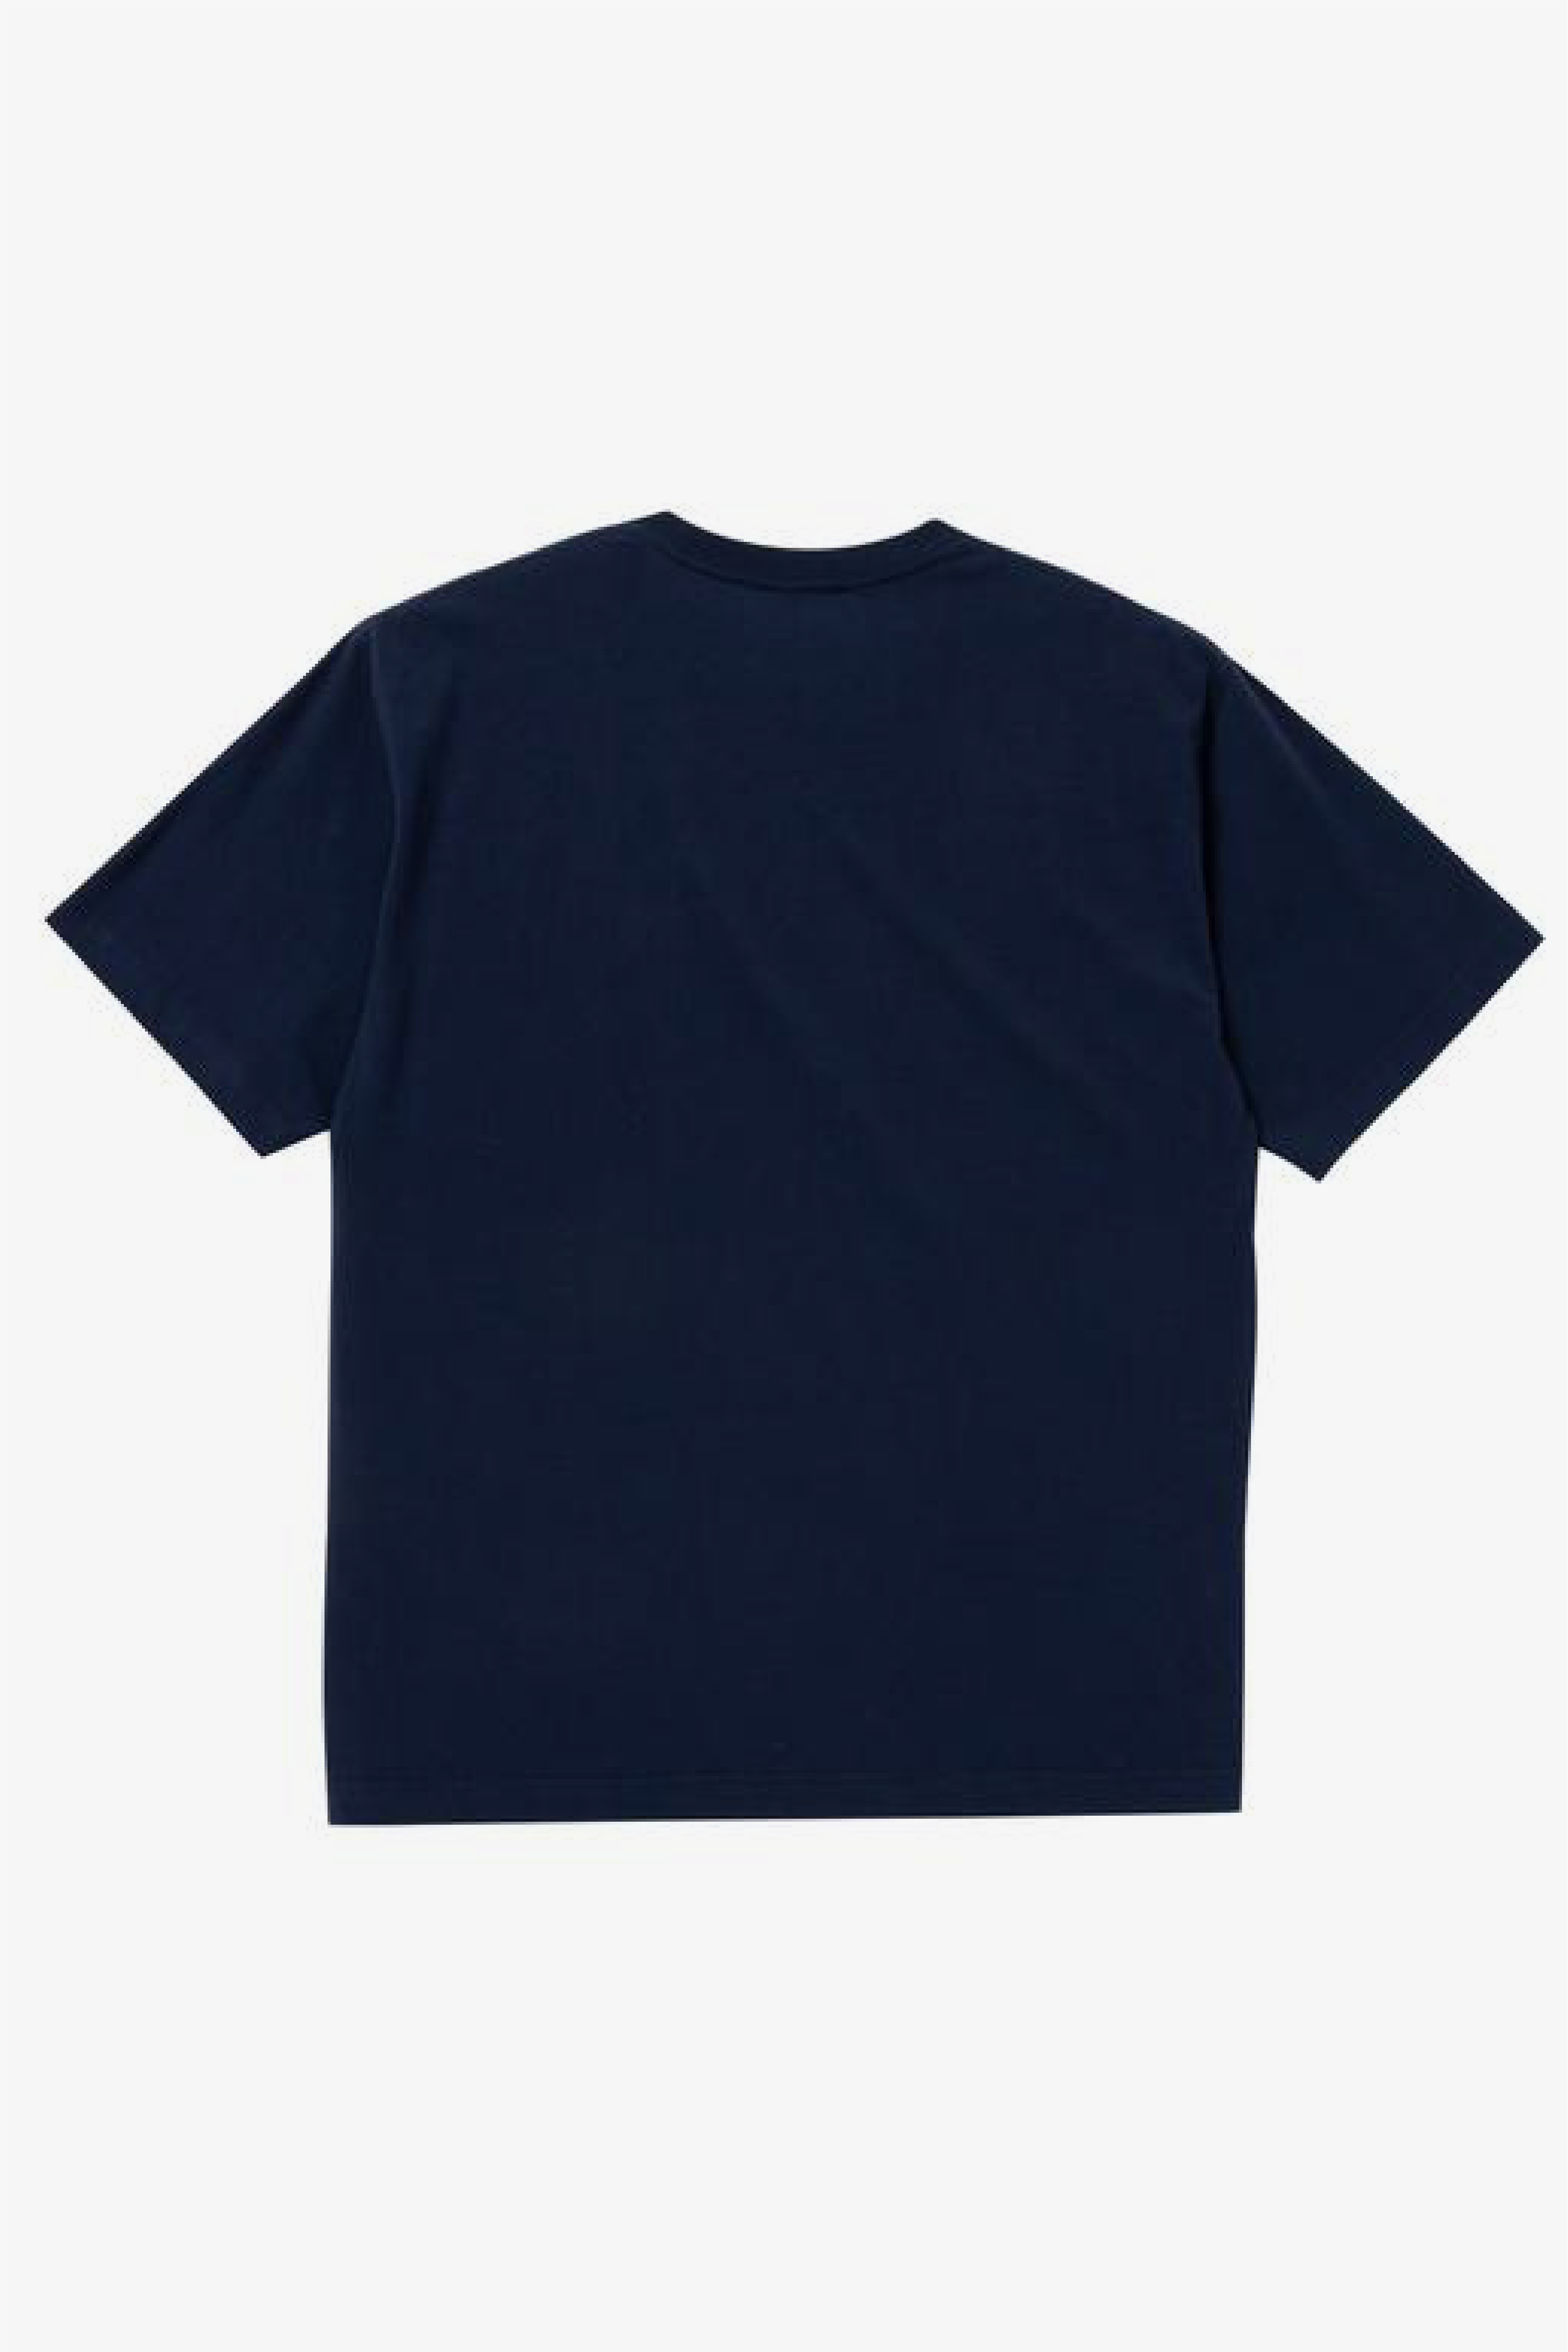 Selectshop FRAME - BLACKEYEPATCH OG Label Tee T-Shirt Dubai